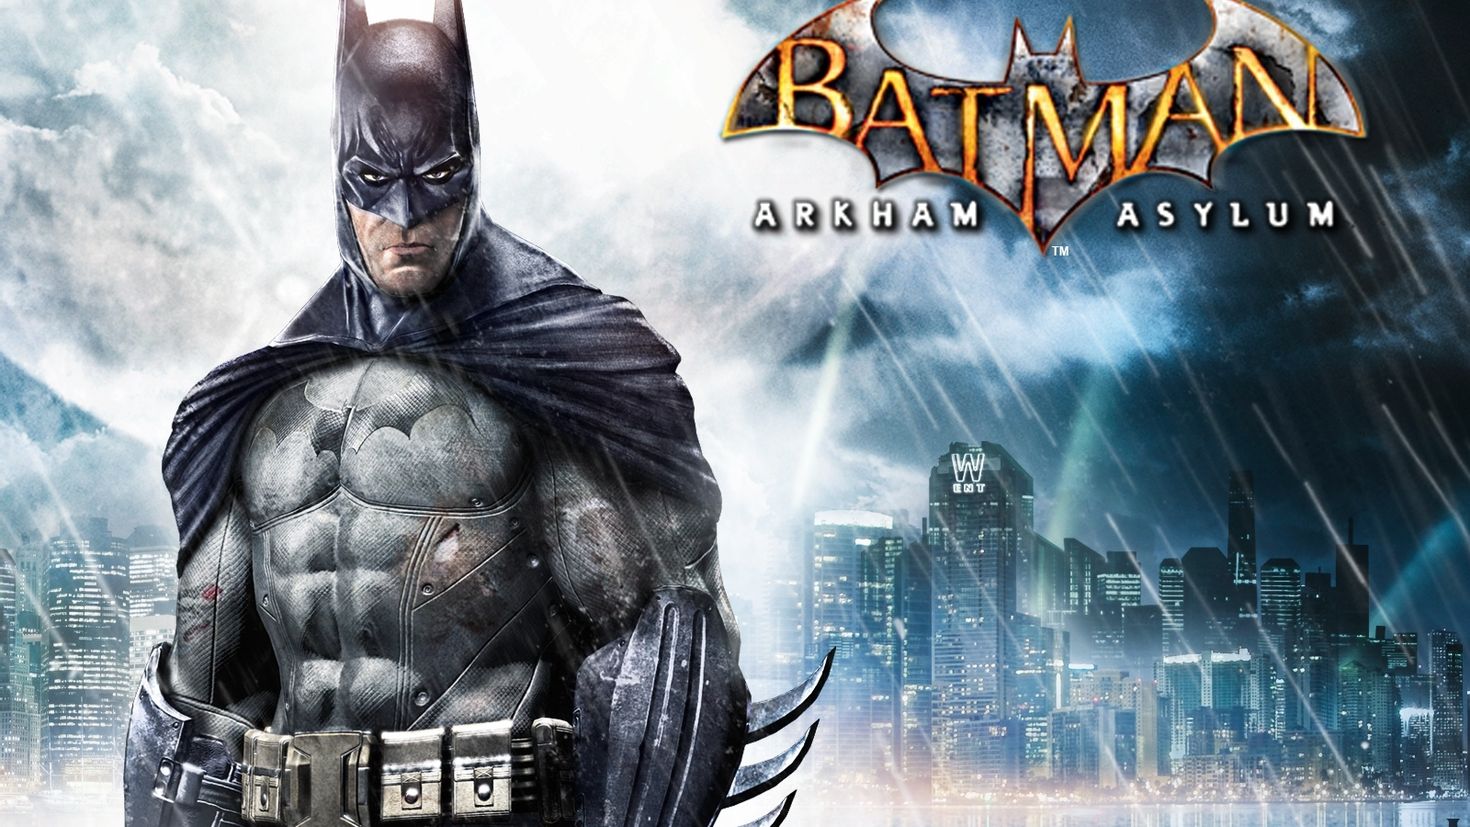 Бэтмен аркхам асайлум. Бэтмен: лечебница Аркхэм» (2009).. Batman Asylum. Batman: Arkham Asylum. Бэтмен игра.